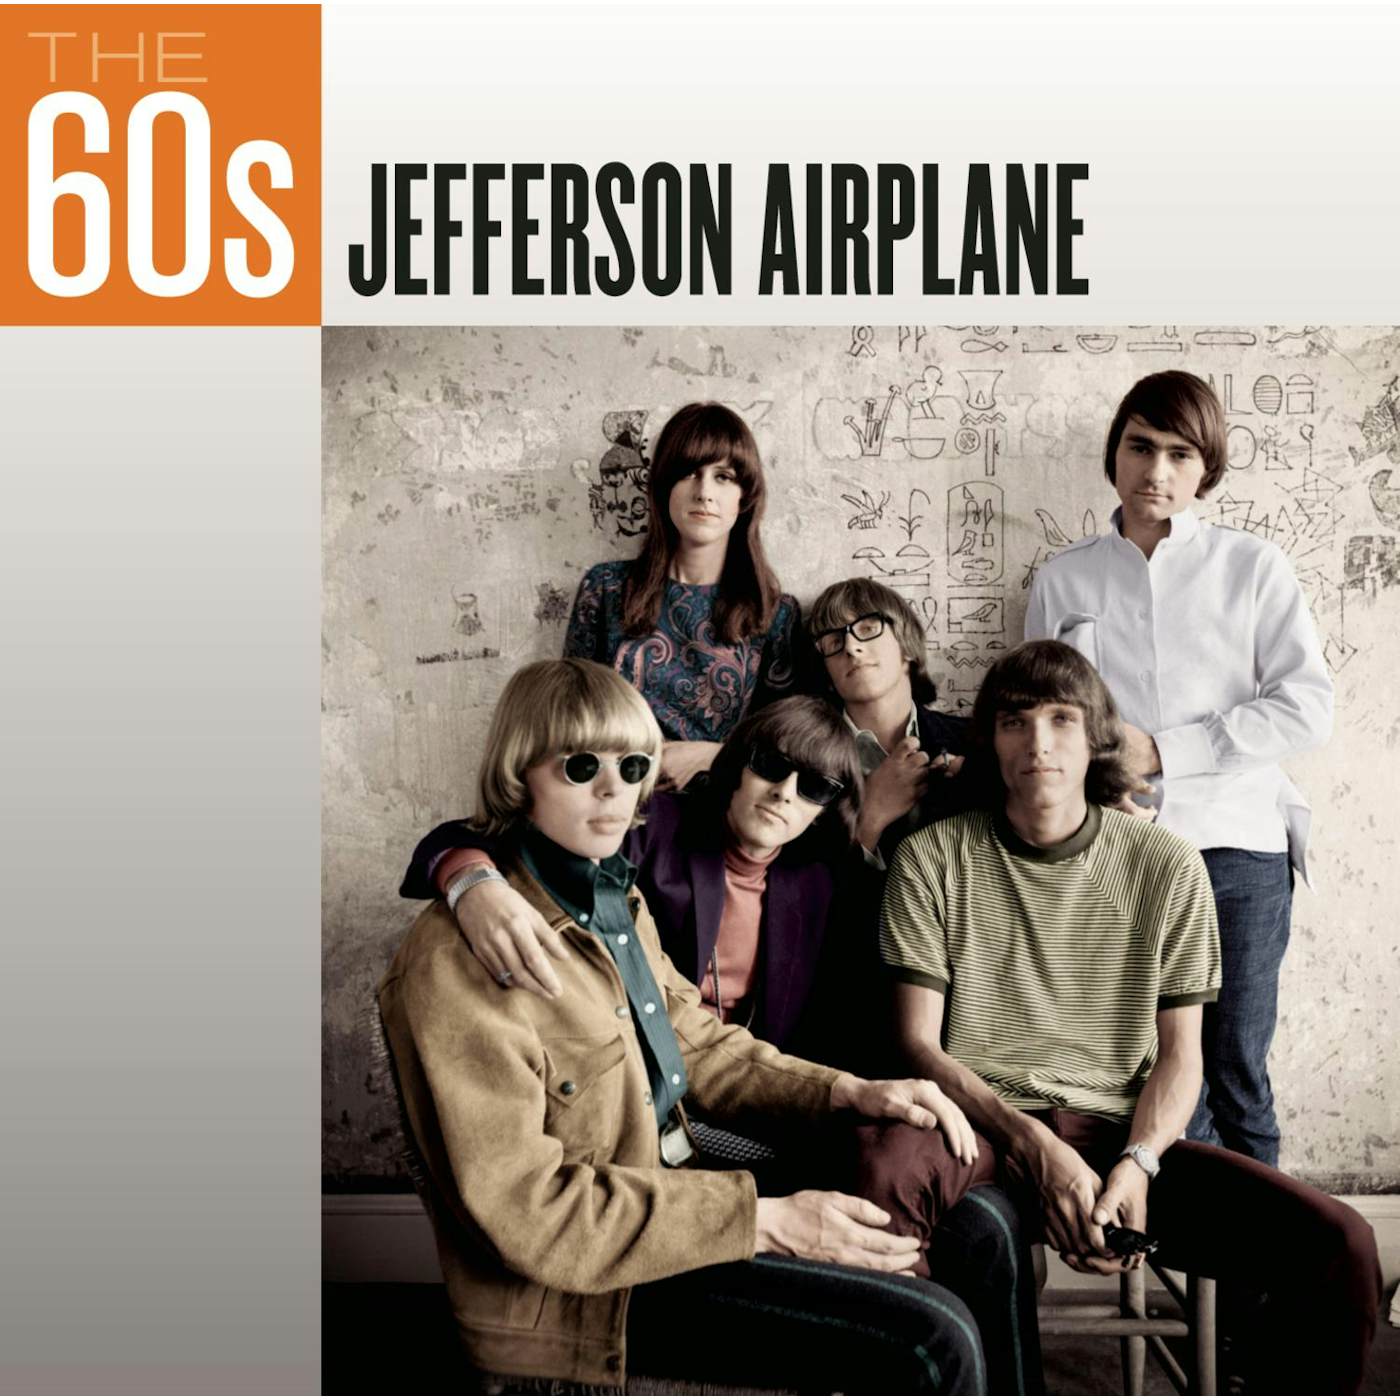 60S: JEFFERSON AIRPLANE CD